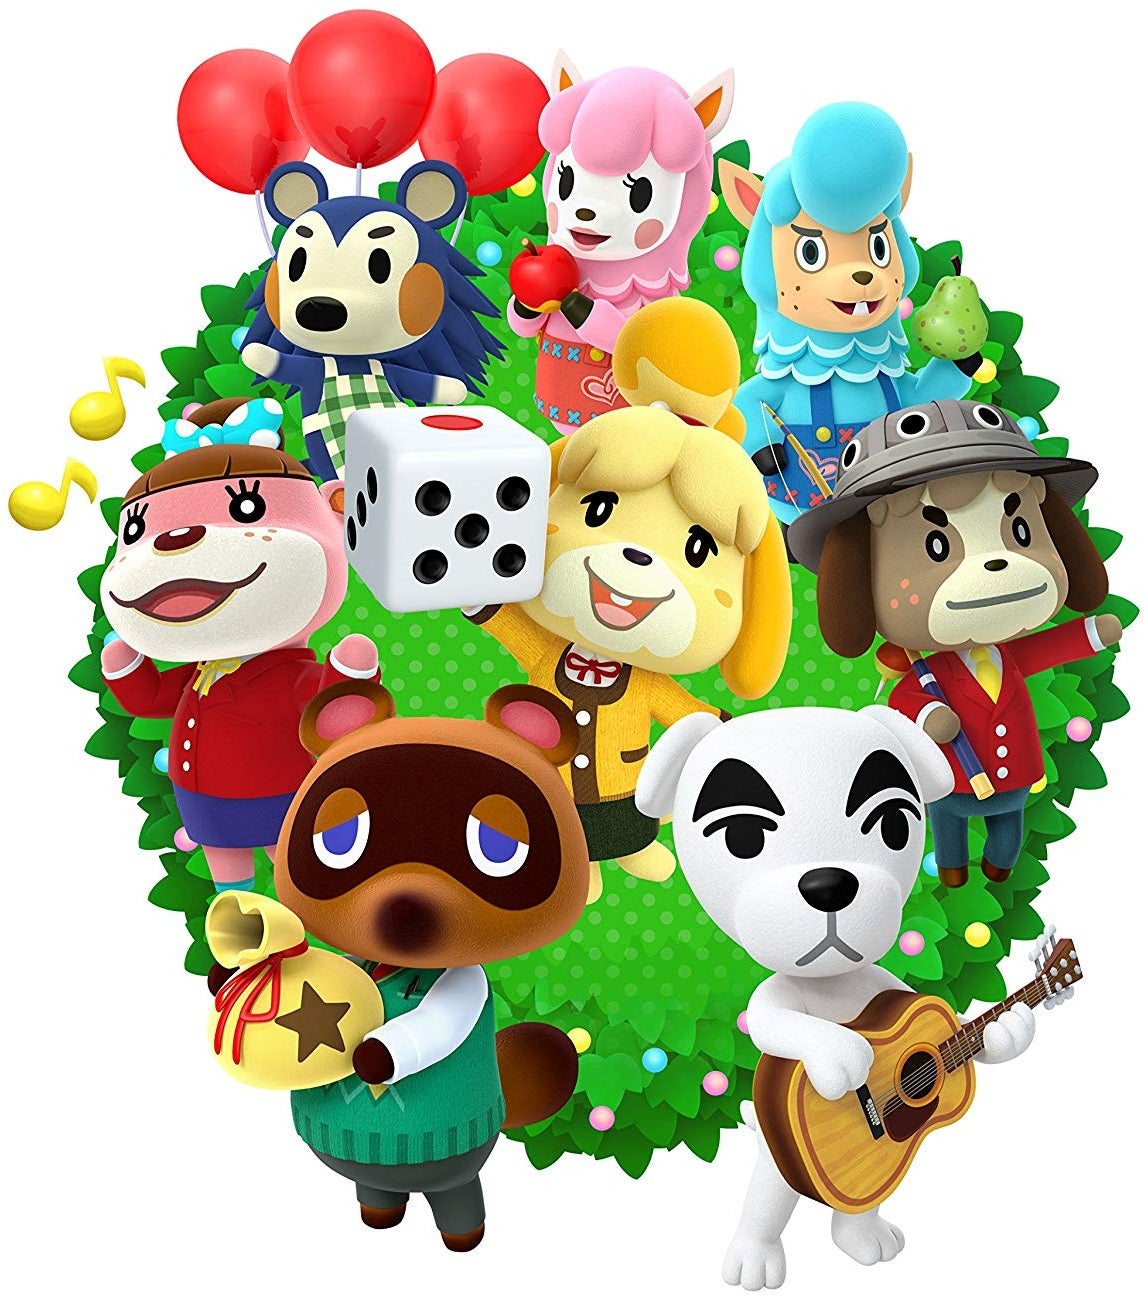 Nintendo Animal Crossing Amiibo Cards - Series 5 - 3 Card Pack